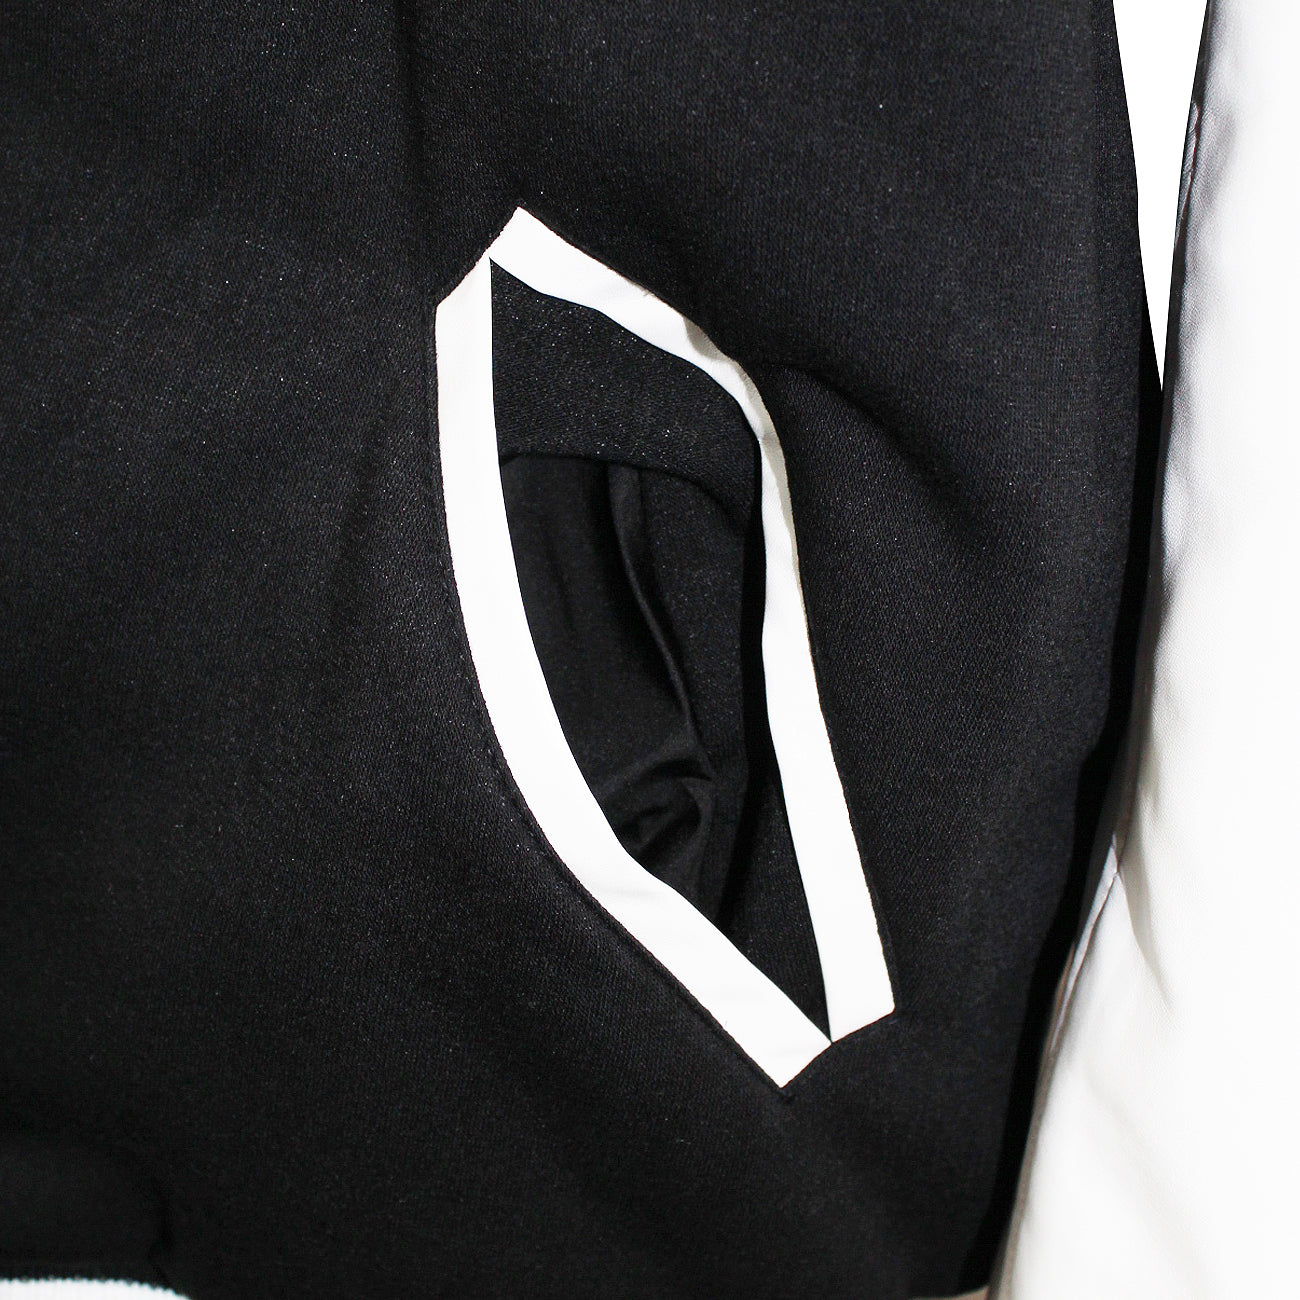 JH Design NBA Men's Reversible Fleece Jacket Los Angeles Lakers Black White